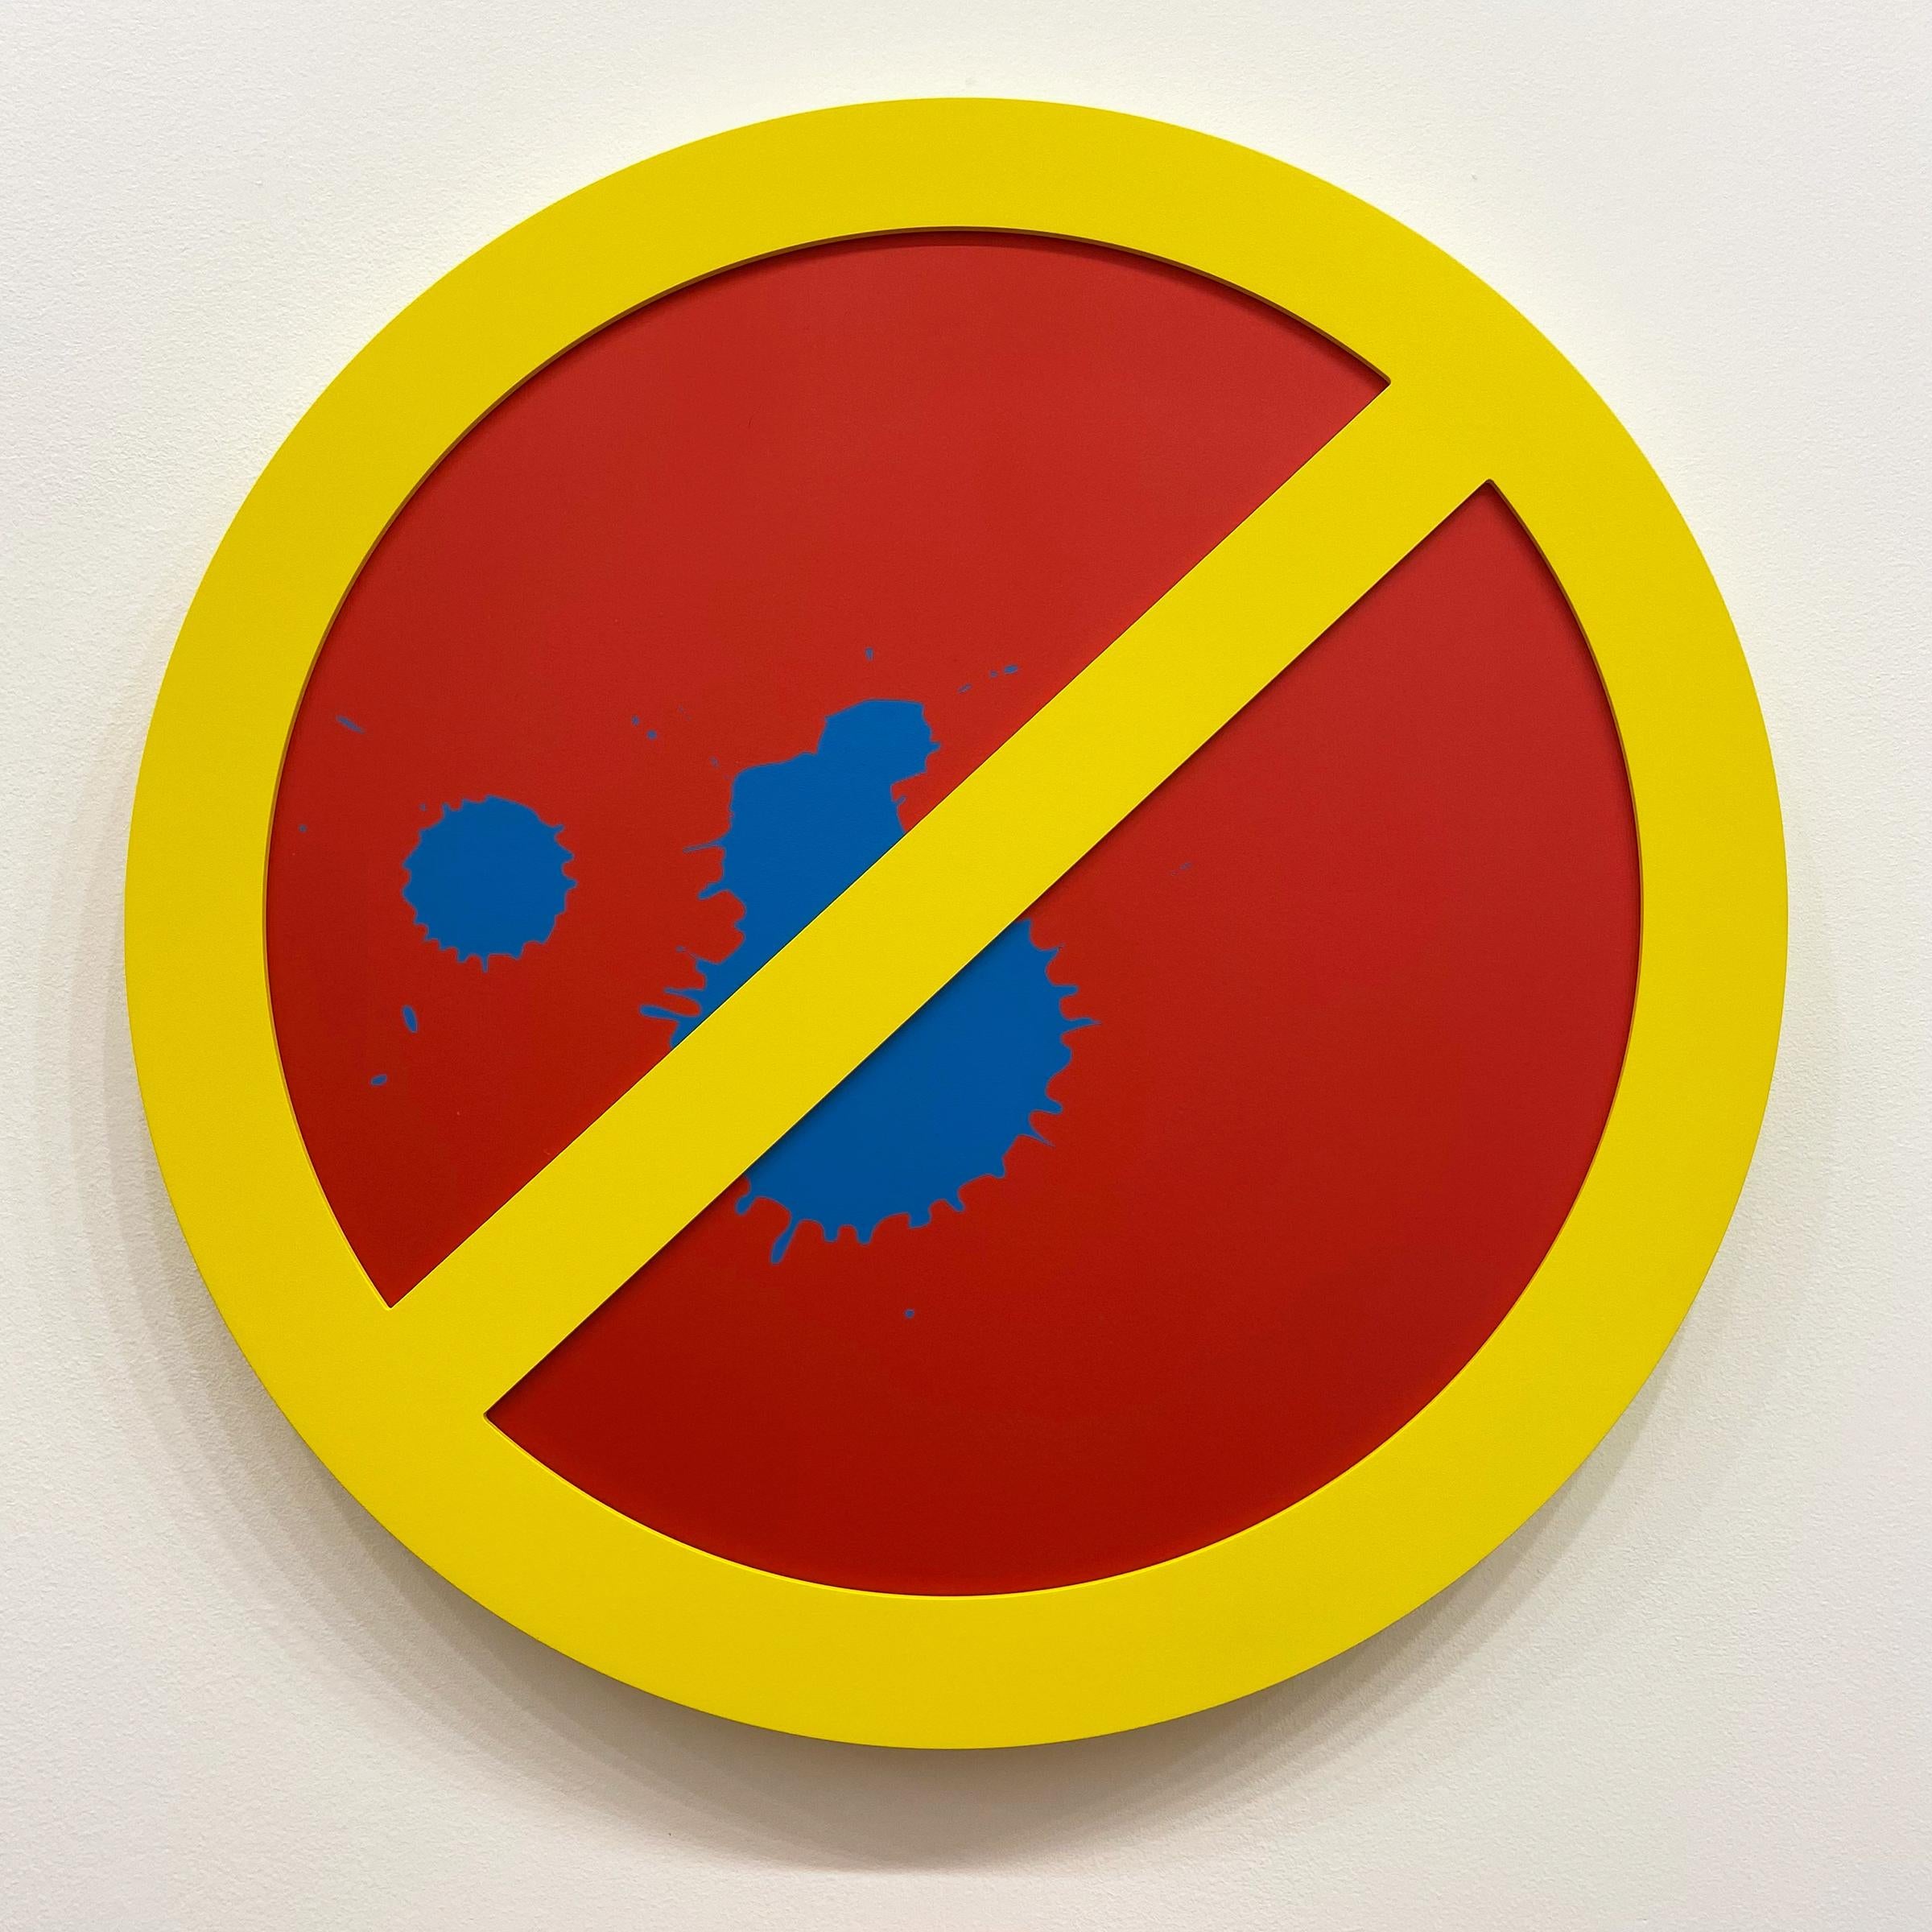 Michael Porten Portrait Painting - "No Porten (Blue on Red)" - conceptual art, wall sculpture - Lawrence Weiner